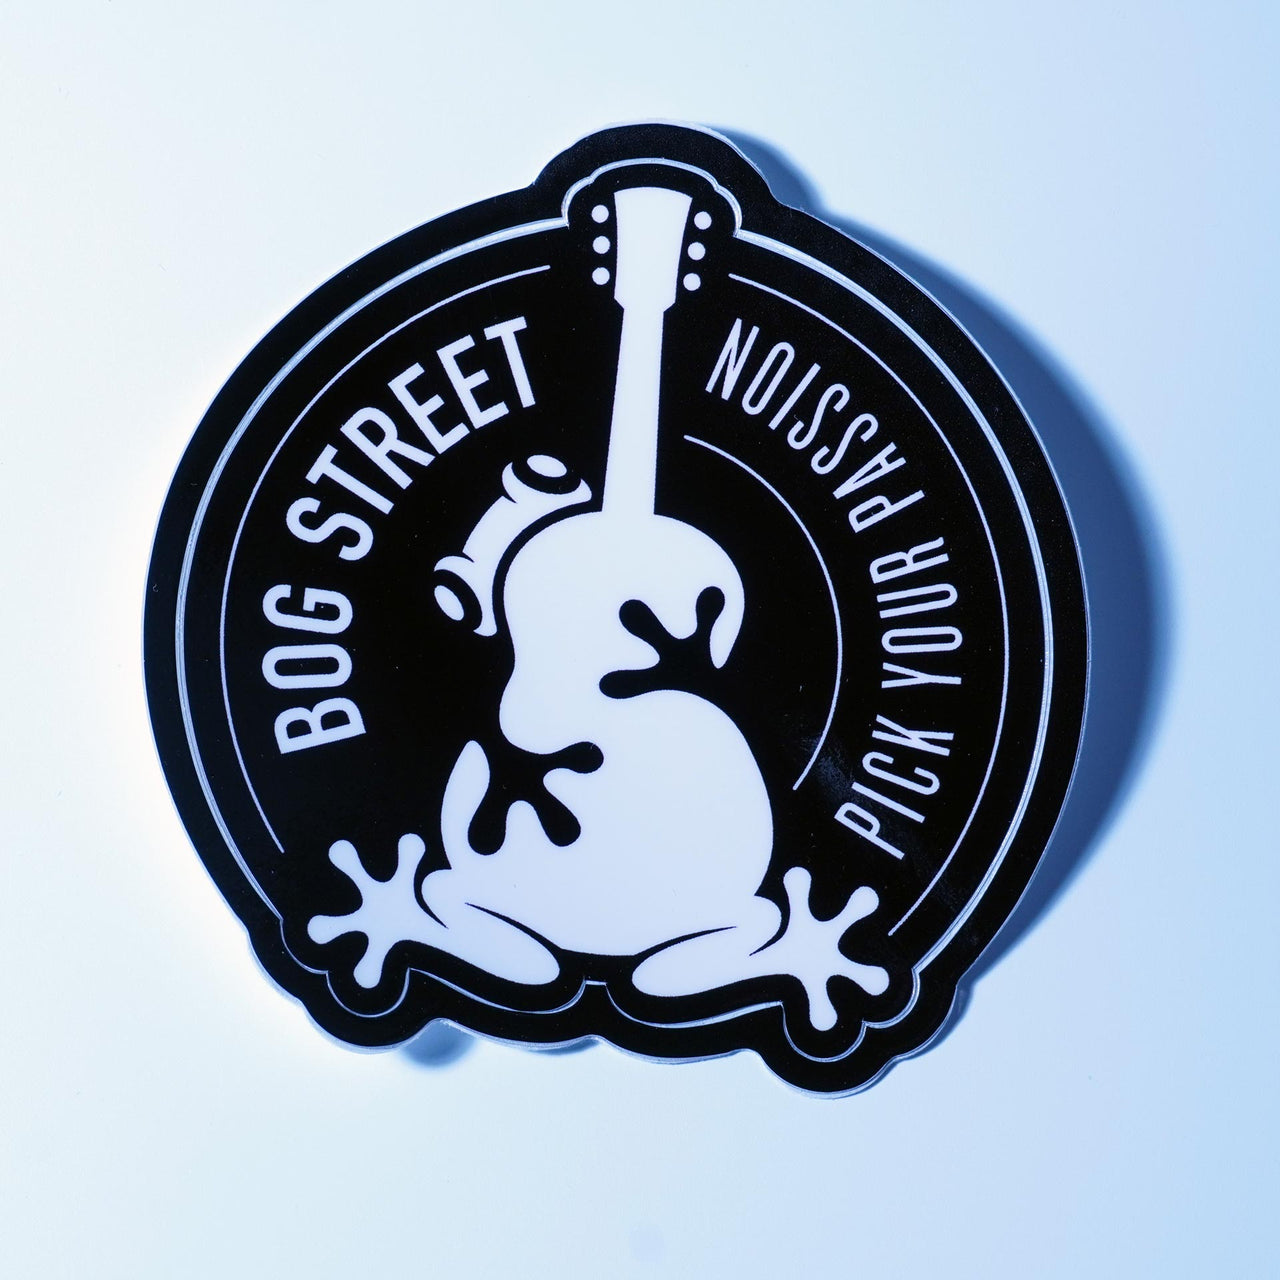 Bog Street Stickers - 6-pack